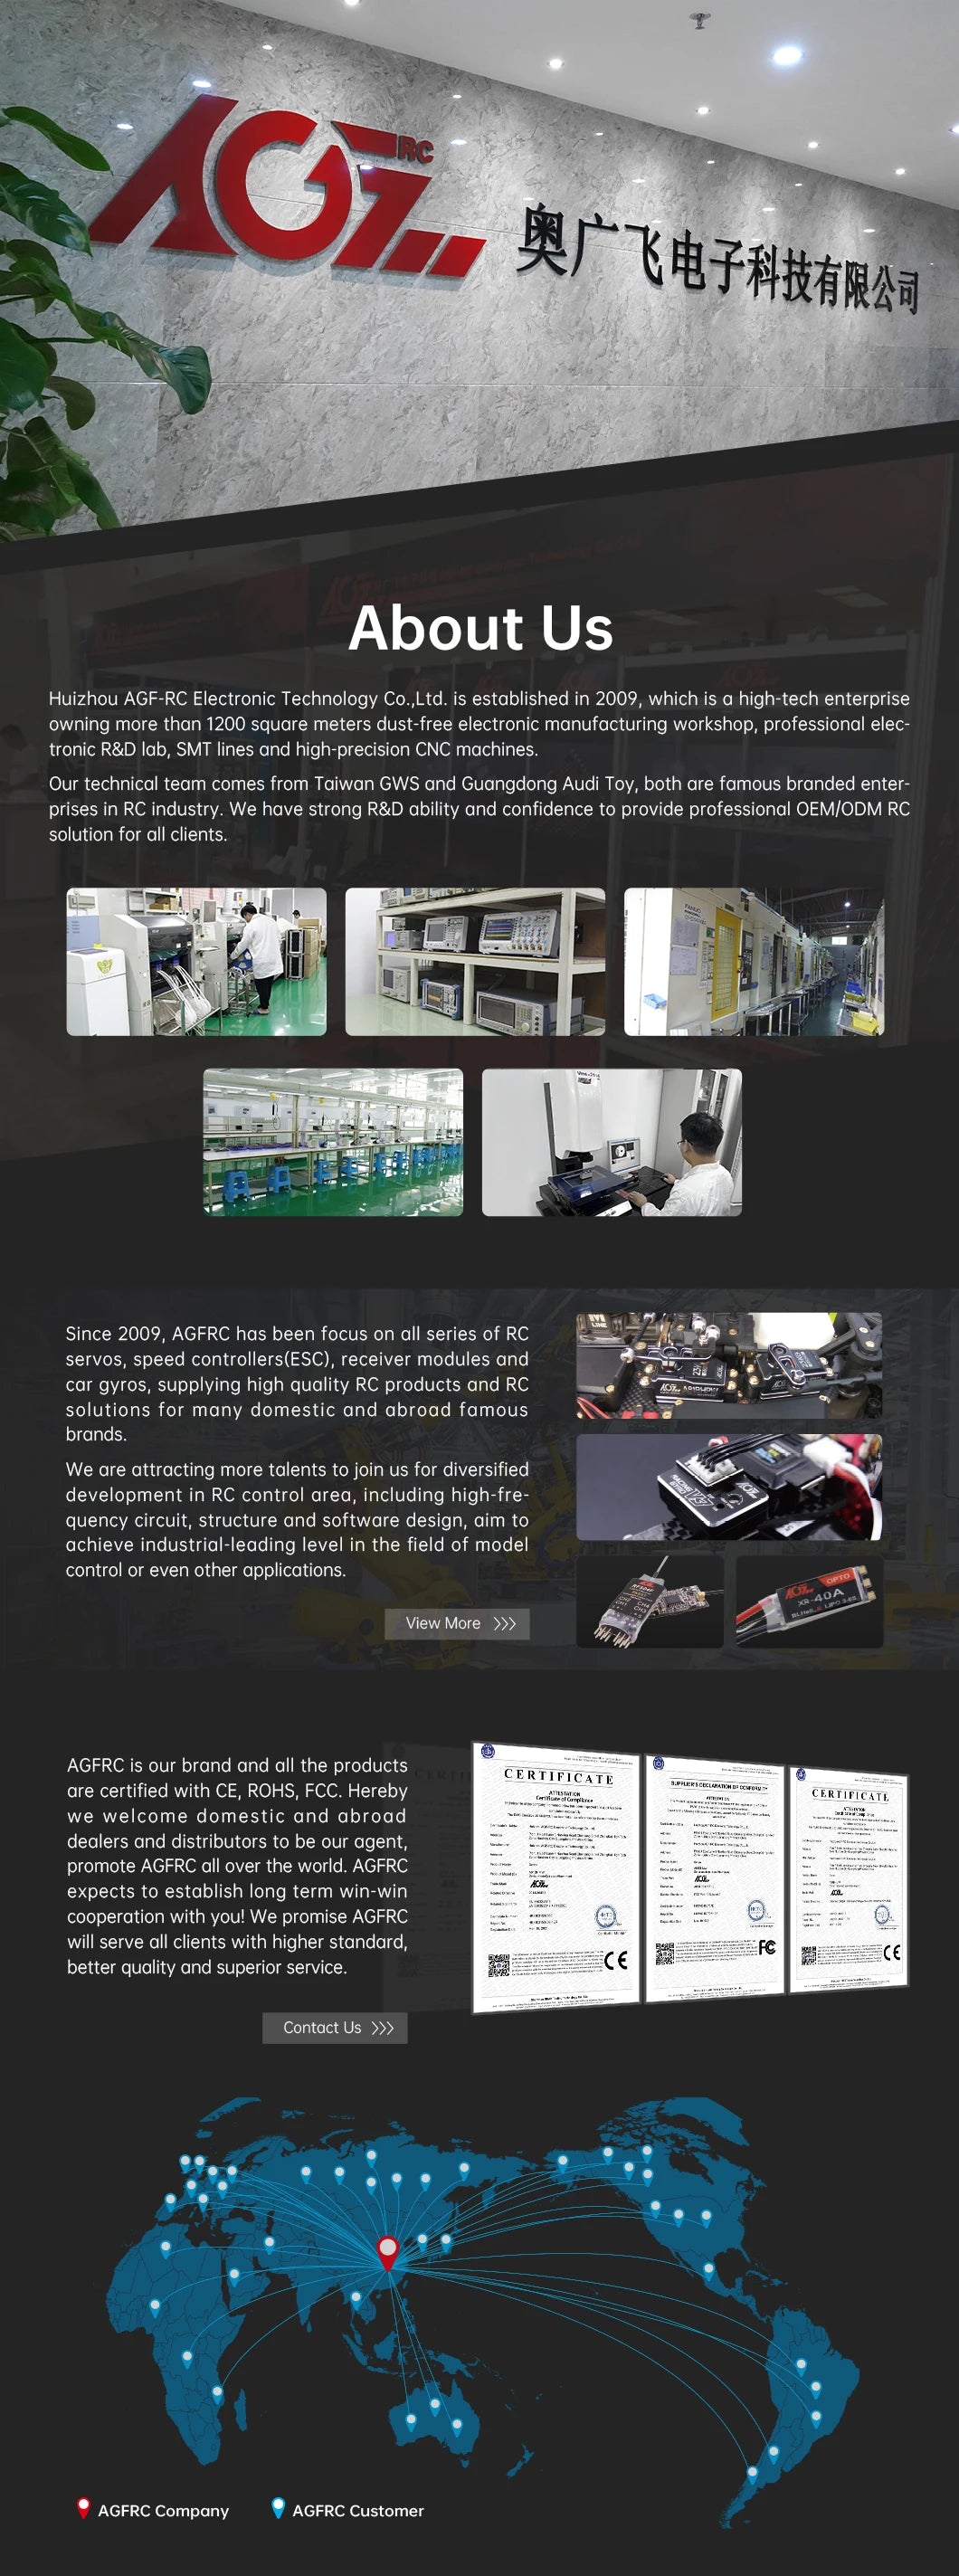 AGFRC A75BUMW, Huizhou AGF-RC Electronic Technology Co-,Ltd. is a